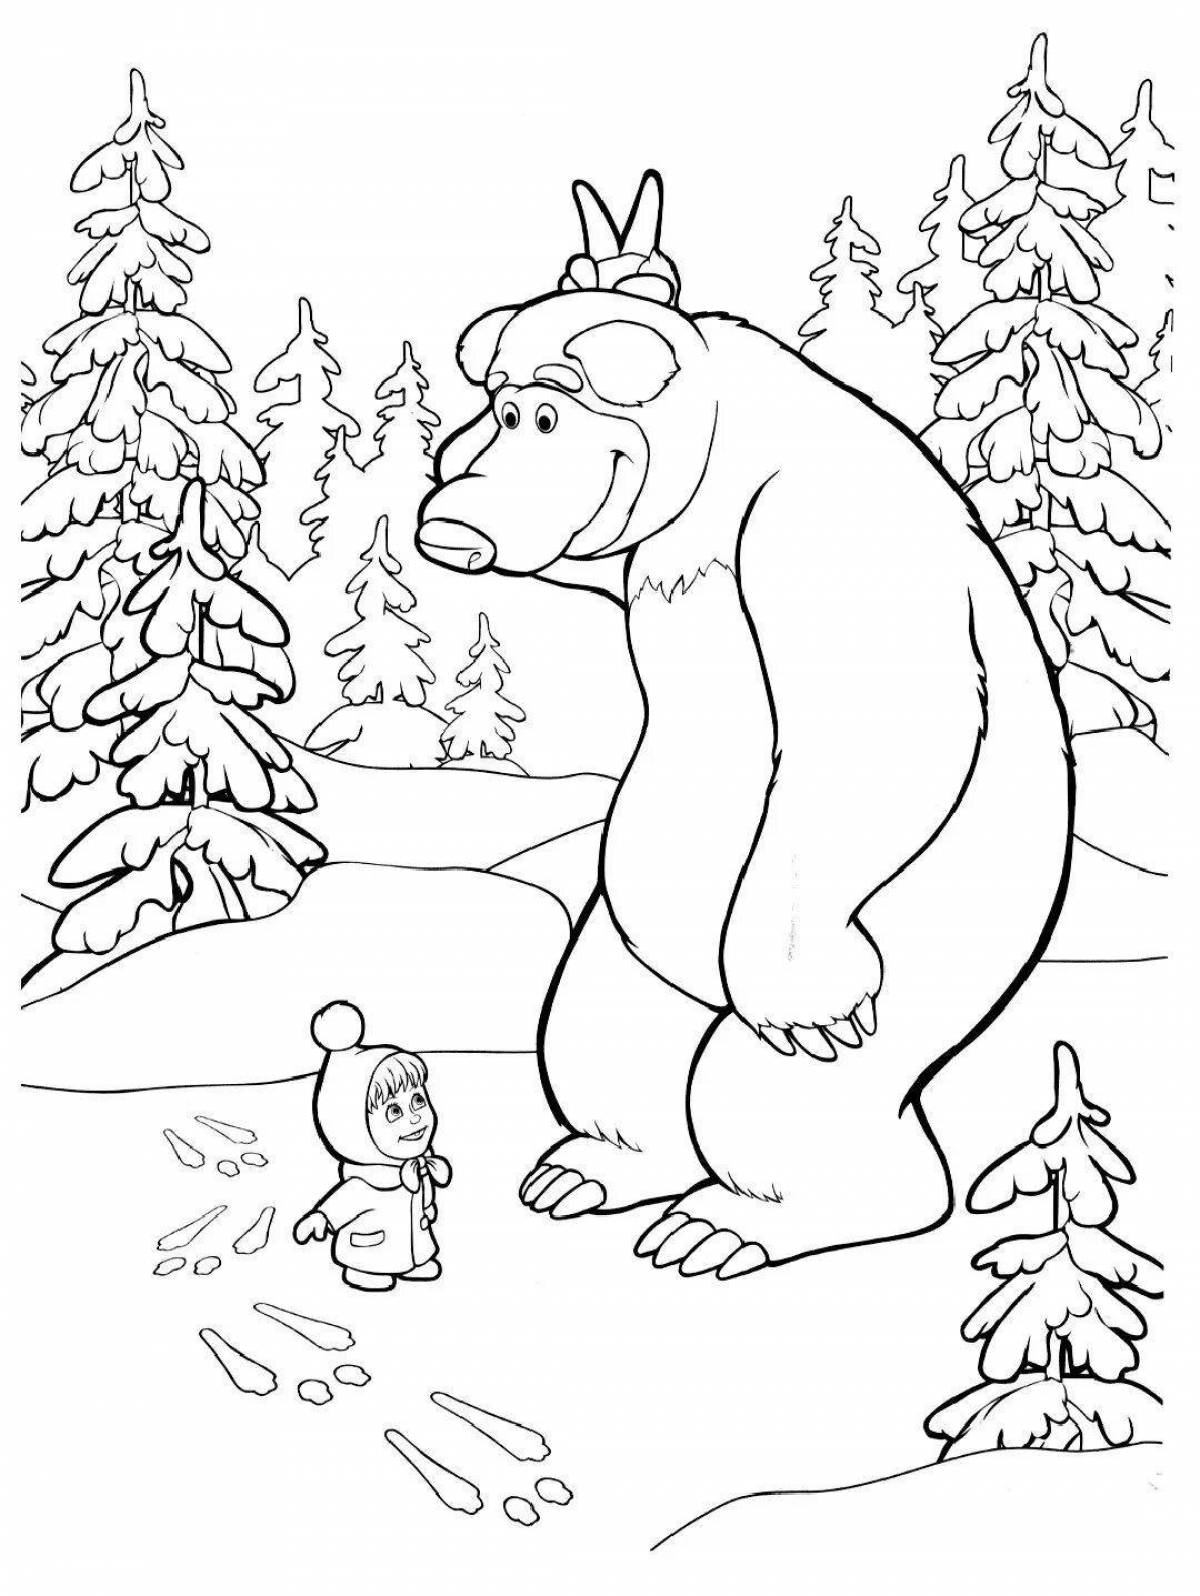 Playful masha and the bear coloring book